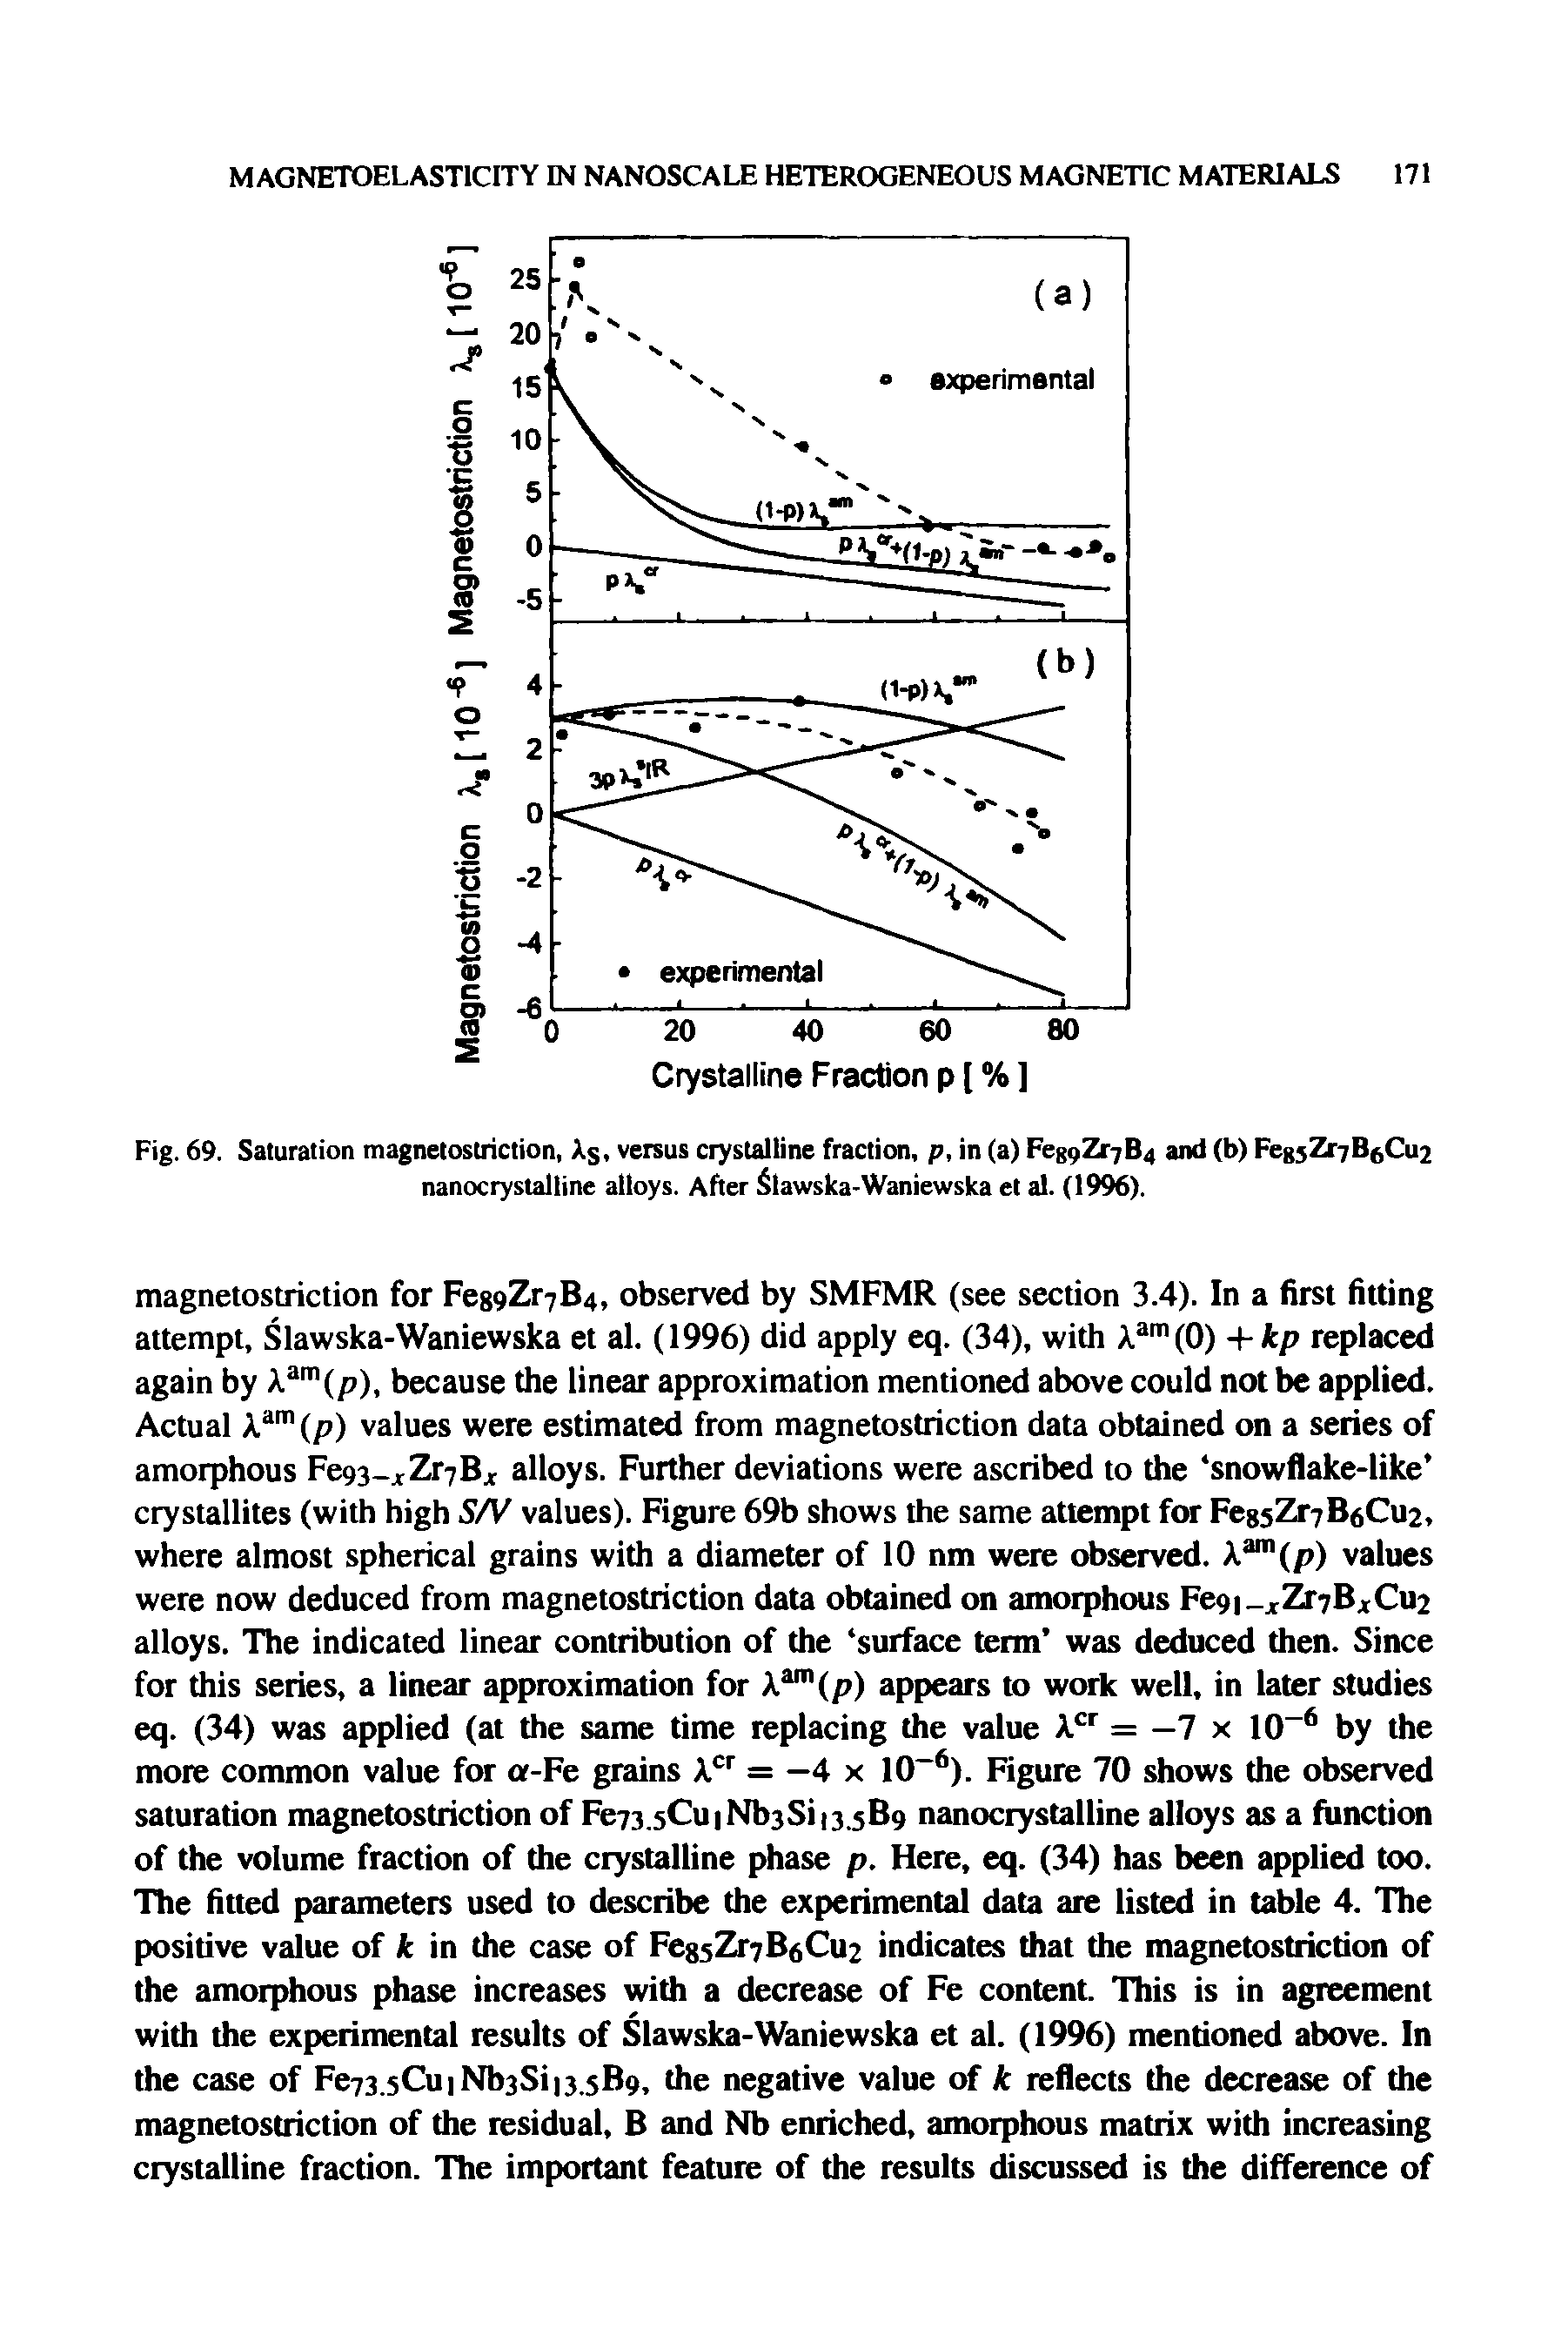 Fig. 69. Saturation magnetostriction, Ag, versus crystalline fraction, p, in (a) Fe89Zr7B4 and (b) FegjZr7B6Cu2 nanocrystalline alloys. After Slawska-Waniewska et al. (1996).